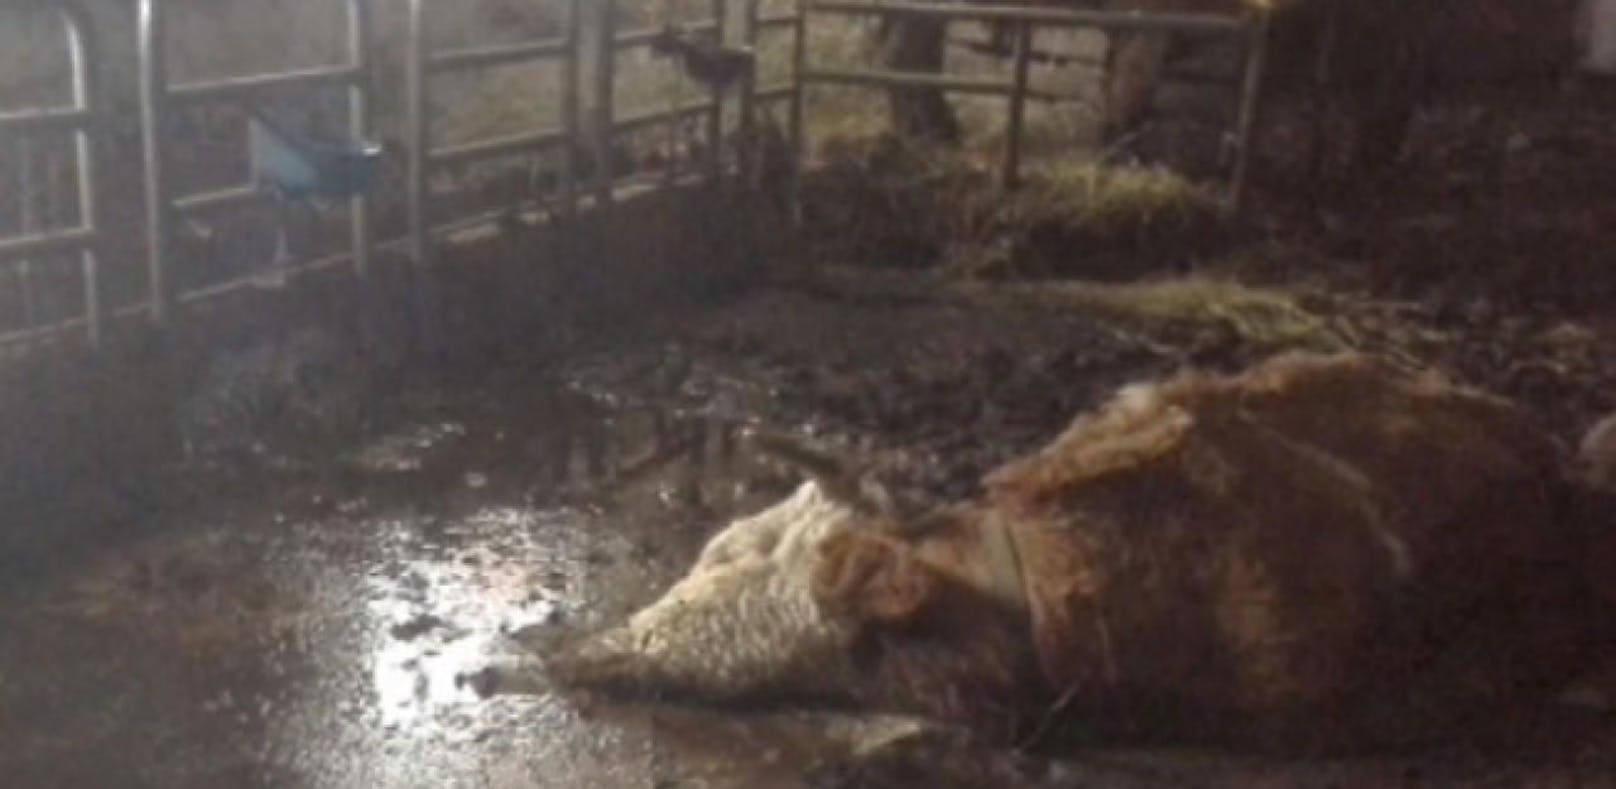 Tote Kühe: Jetzt ermittelt Staatsanwaltschaft